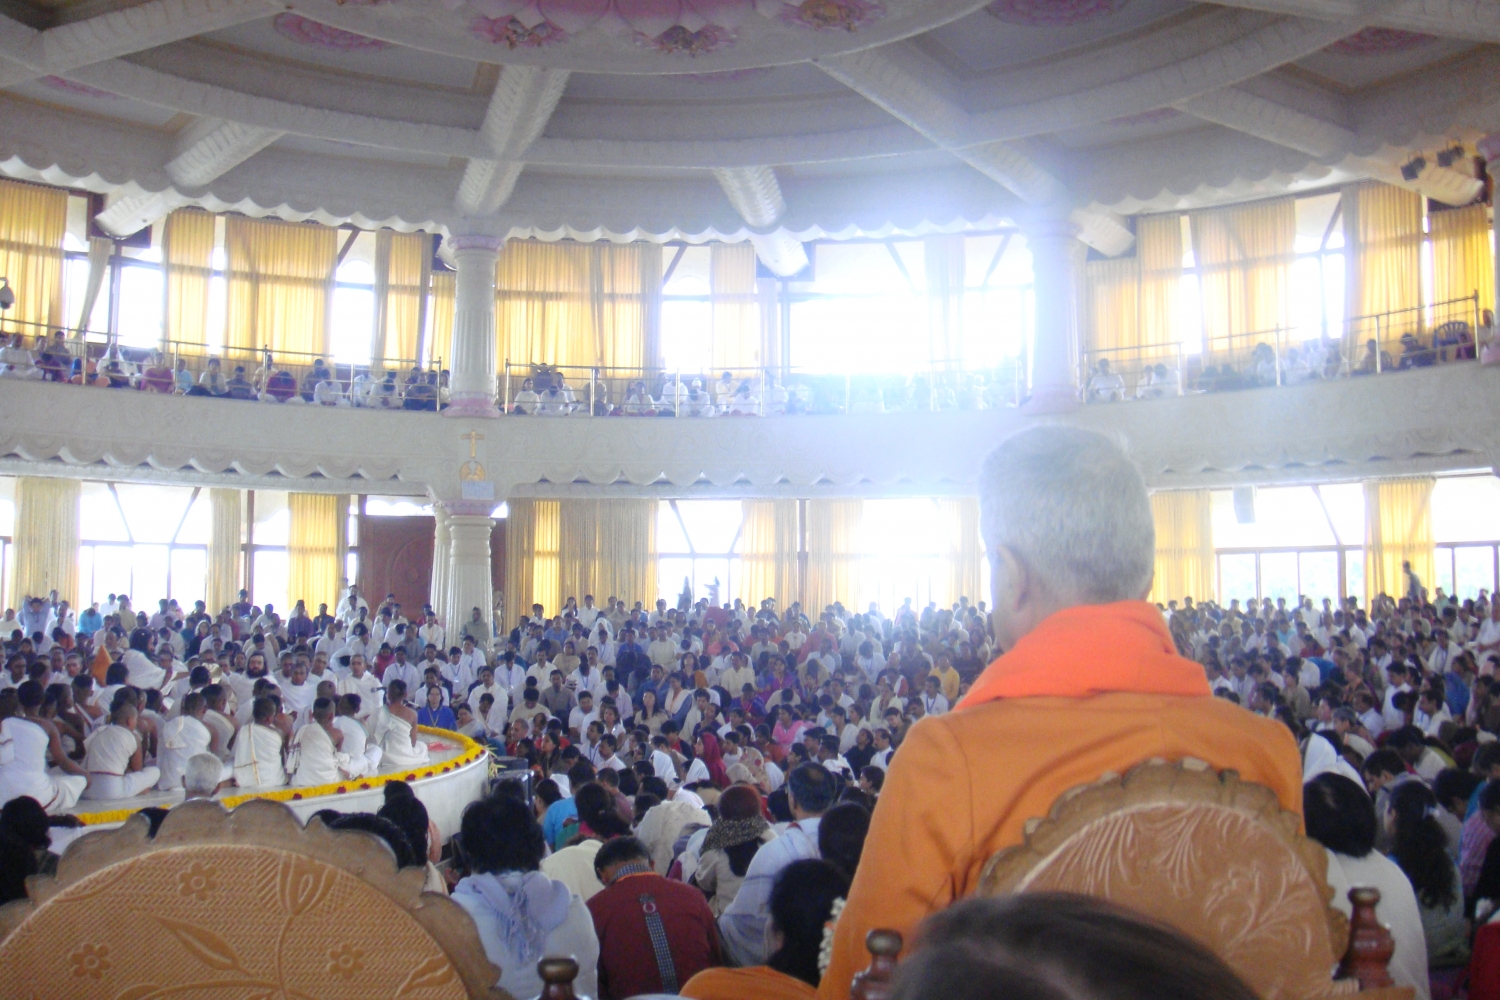 Rencontre de H.H. Jagat Guru Amrta Súryánanda Mahá Rája avec Shrī Shrī Ravi Shankar - Siège de la Art of Living Foundation, Bengaluru, Inde - 2010, janvier